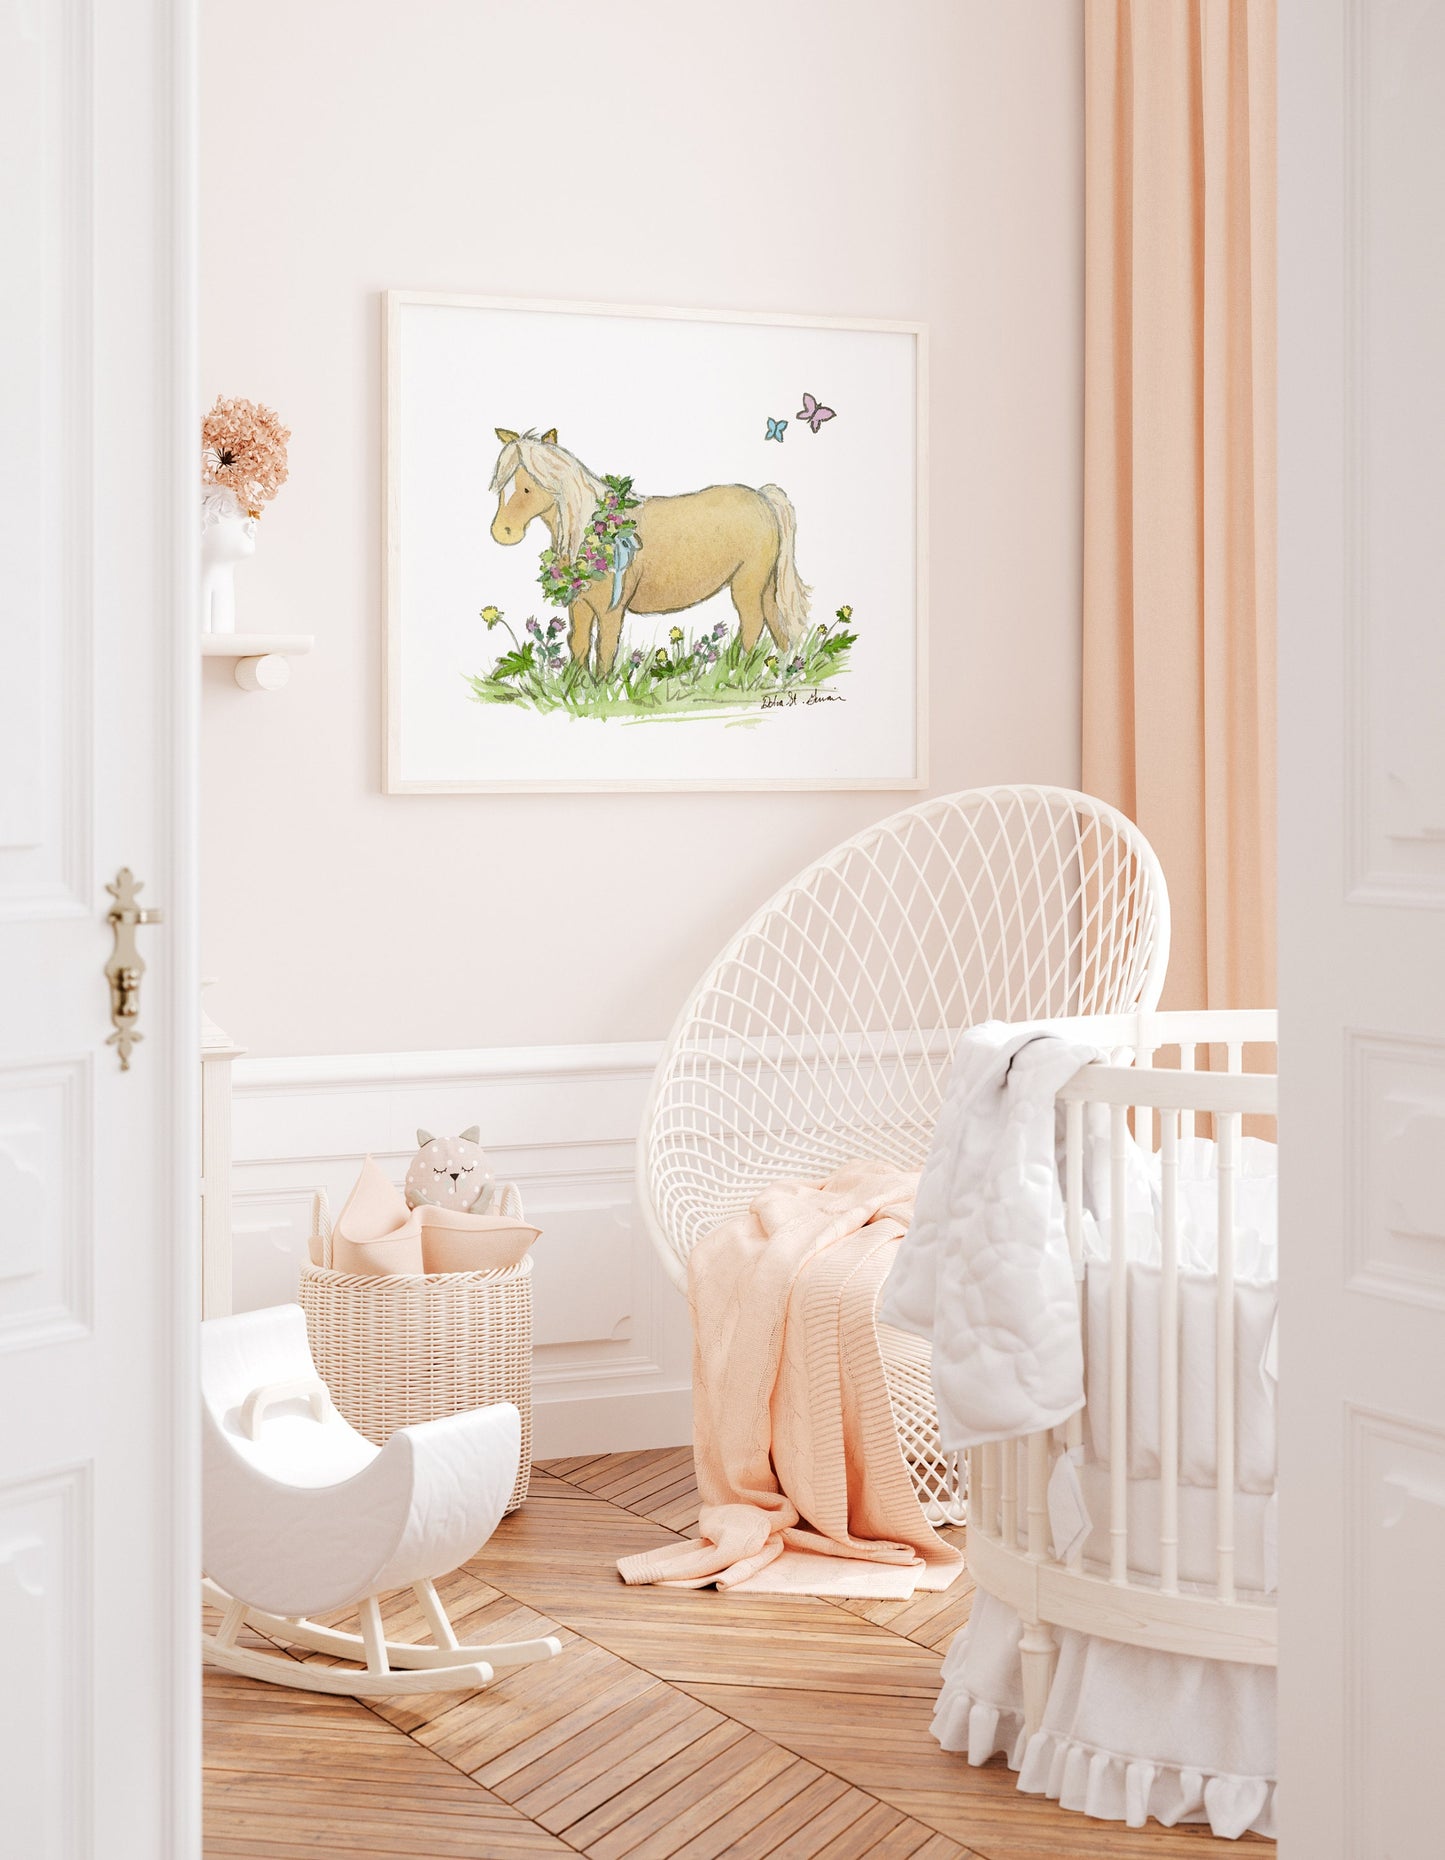 Pony Watercolor Art, Nursery print, Cute Nursery Art